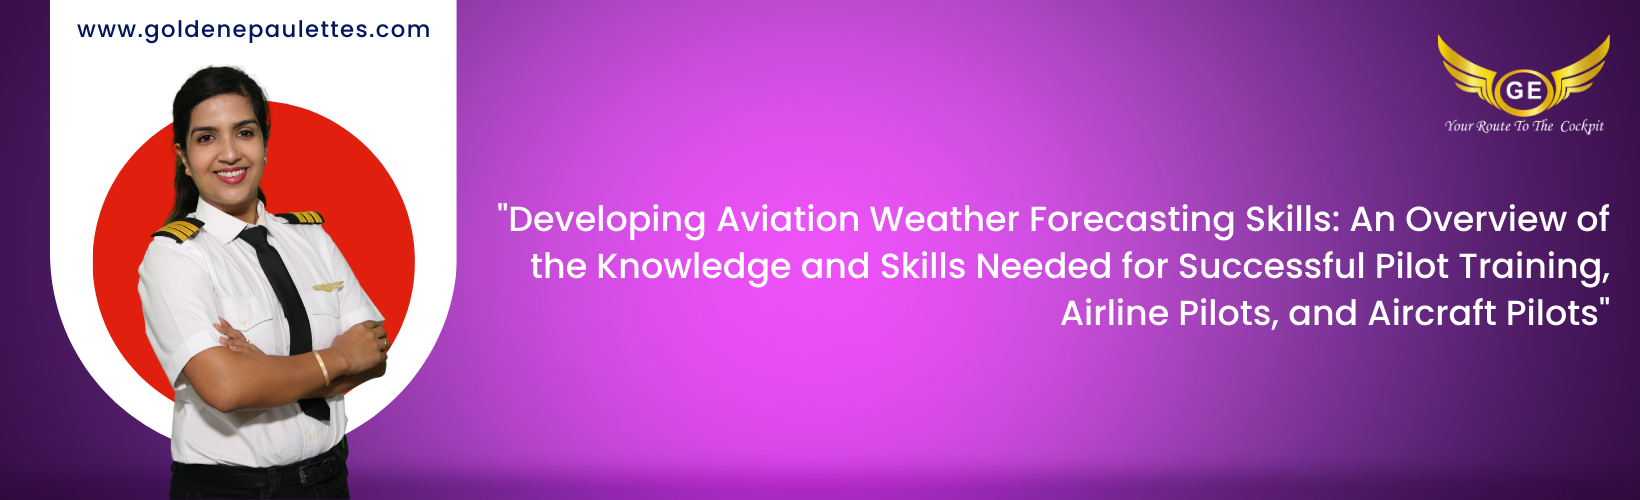 Aviation Weather Forecasting Skills